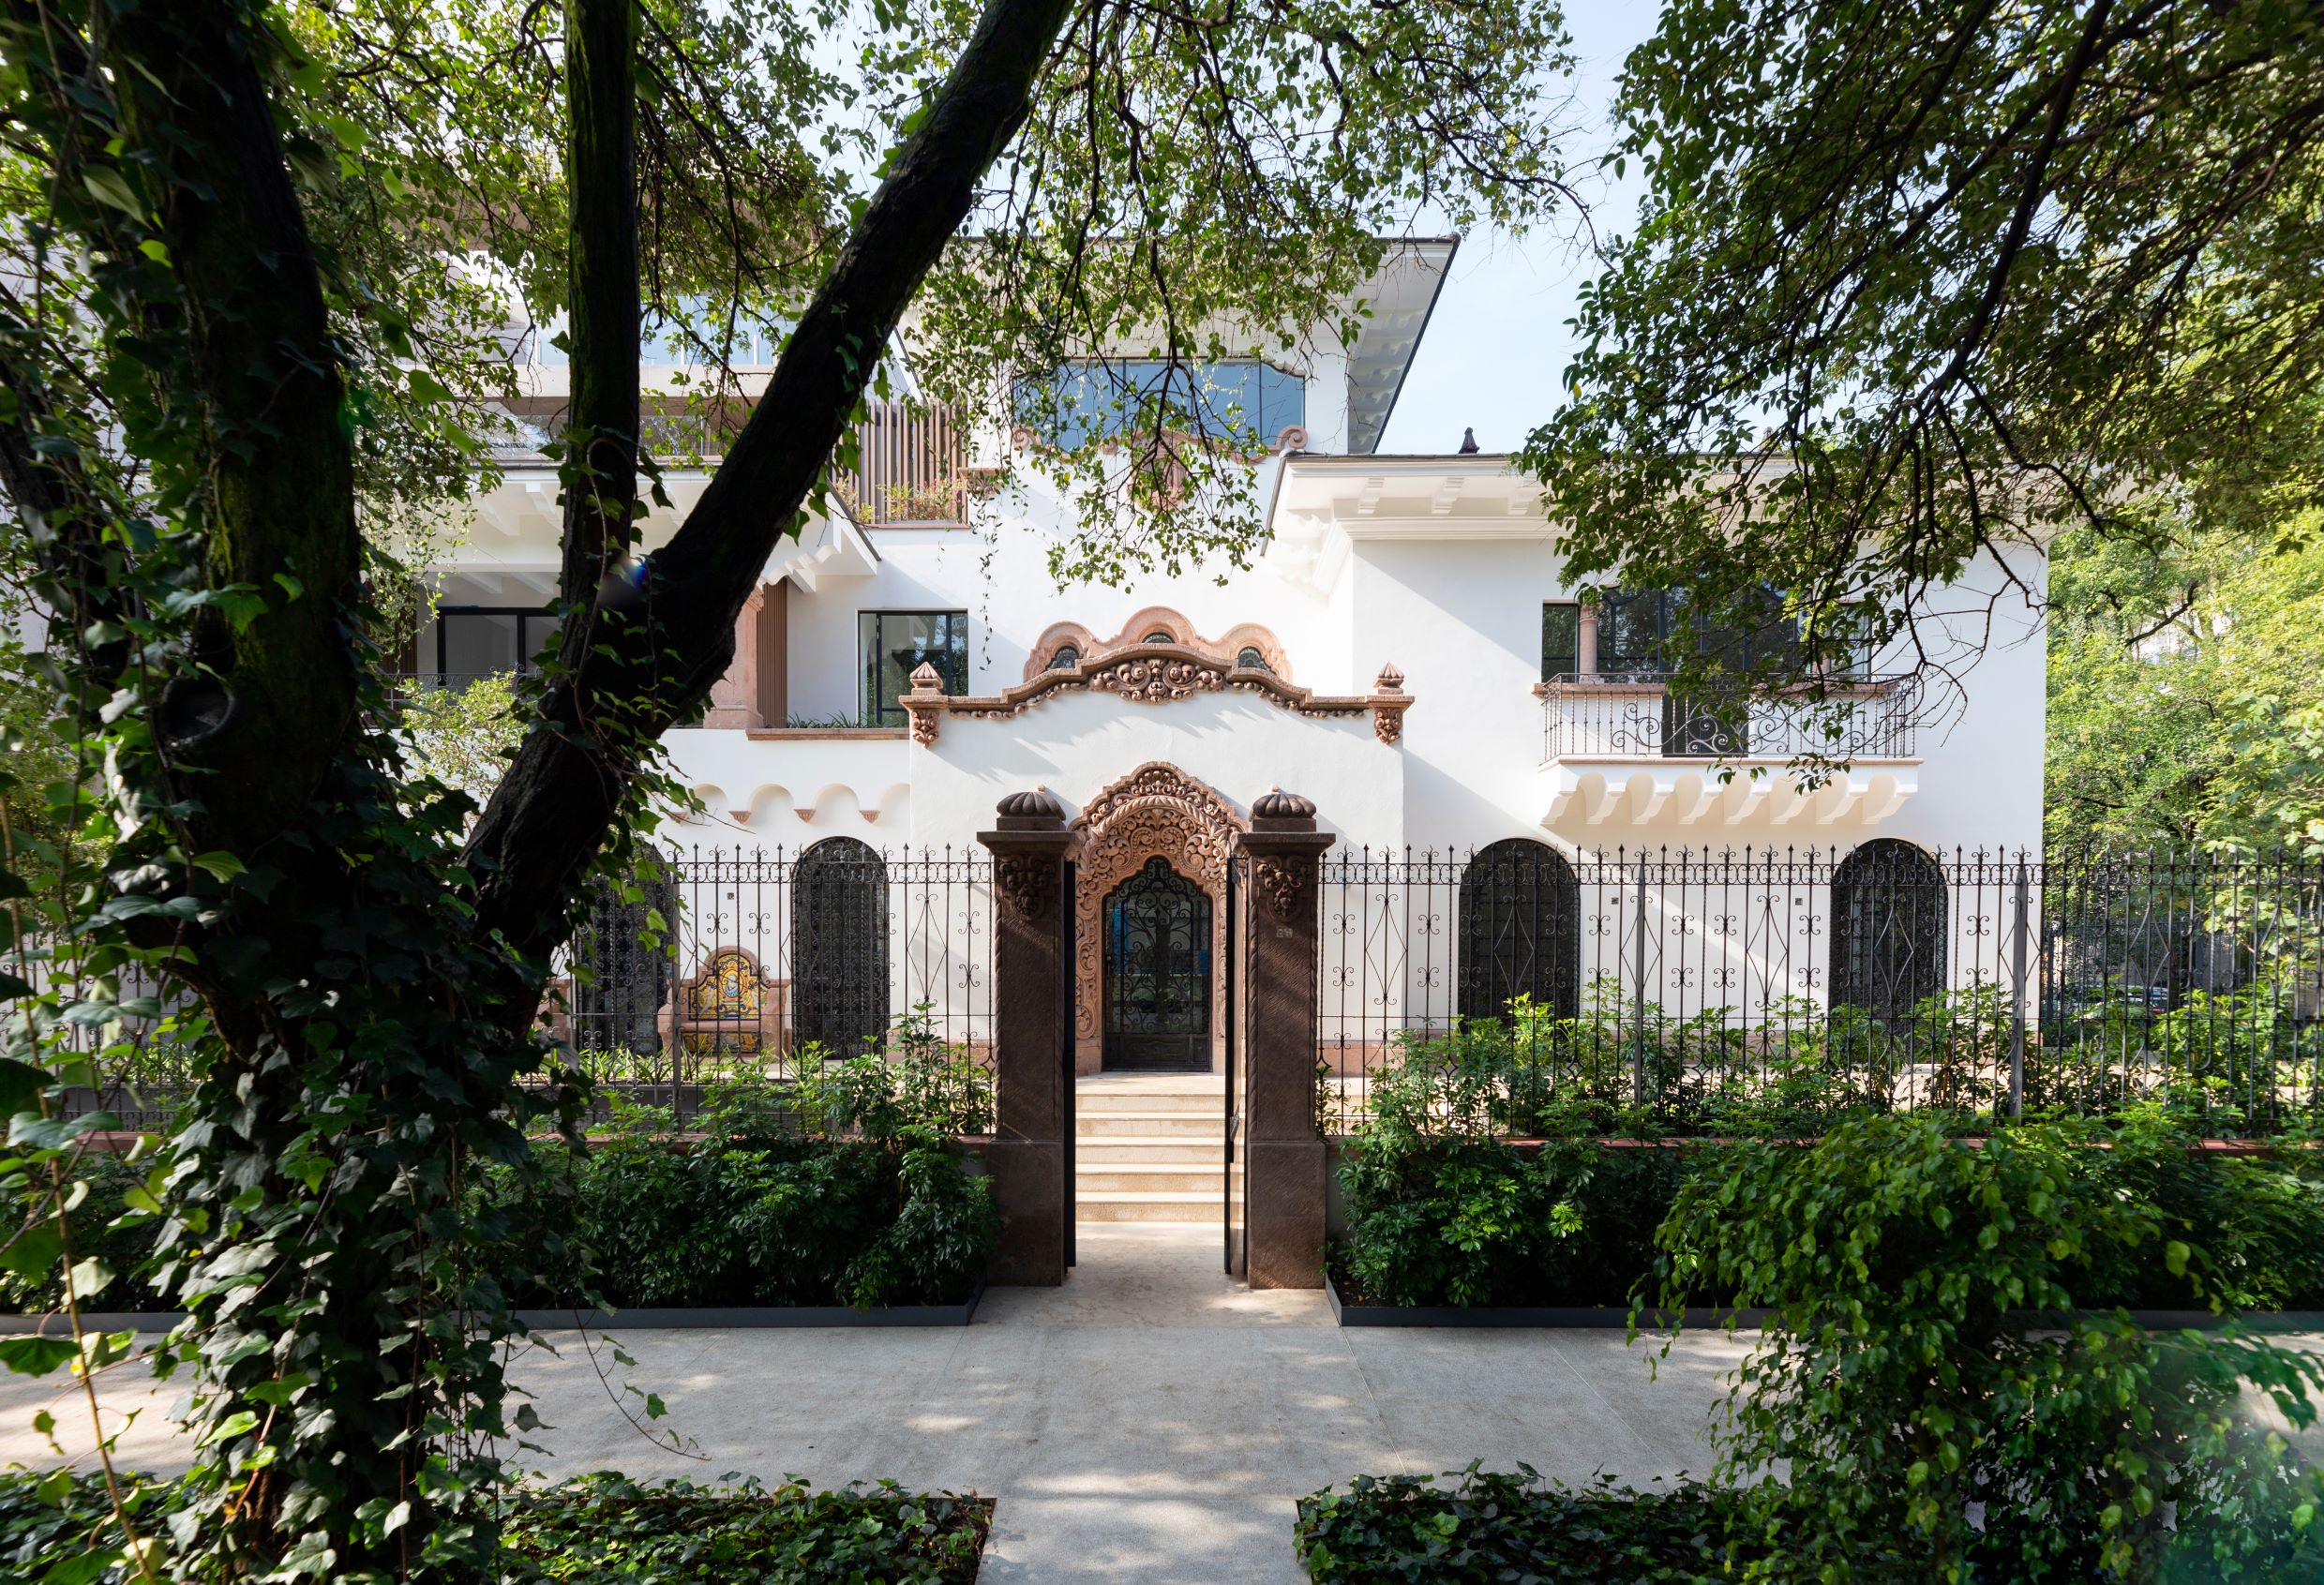 Casa Polanco Opened June 2022 in Mexico City's Polanco Neighborhood